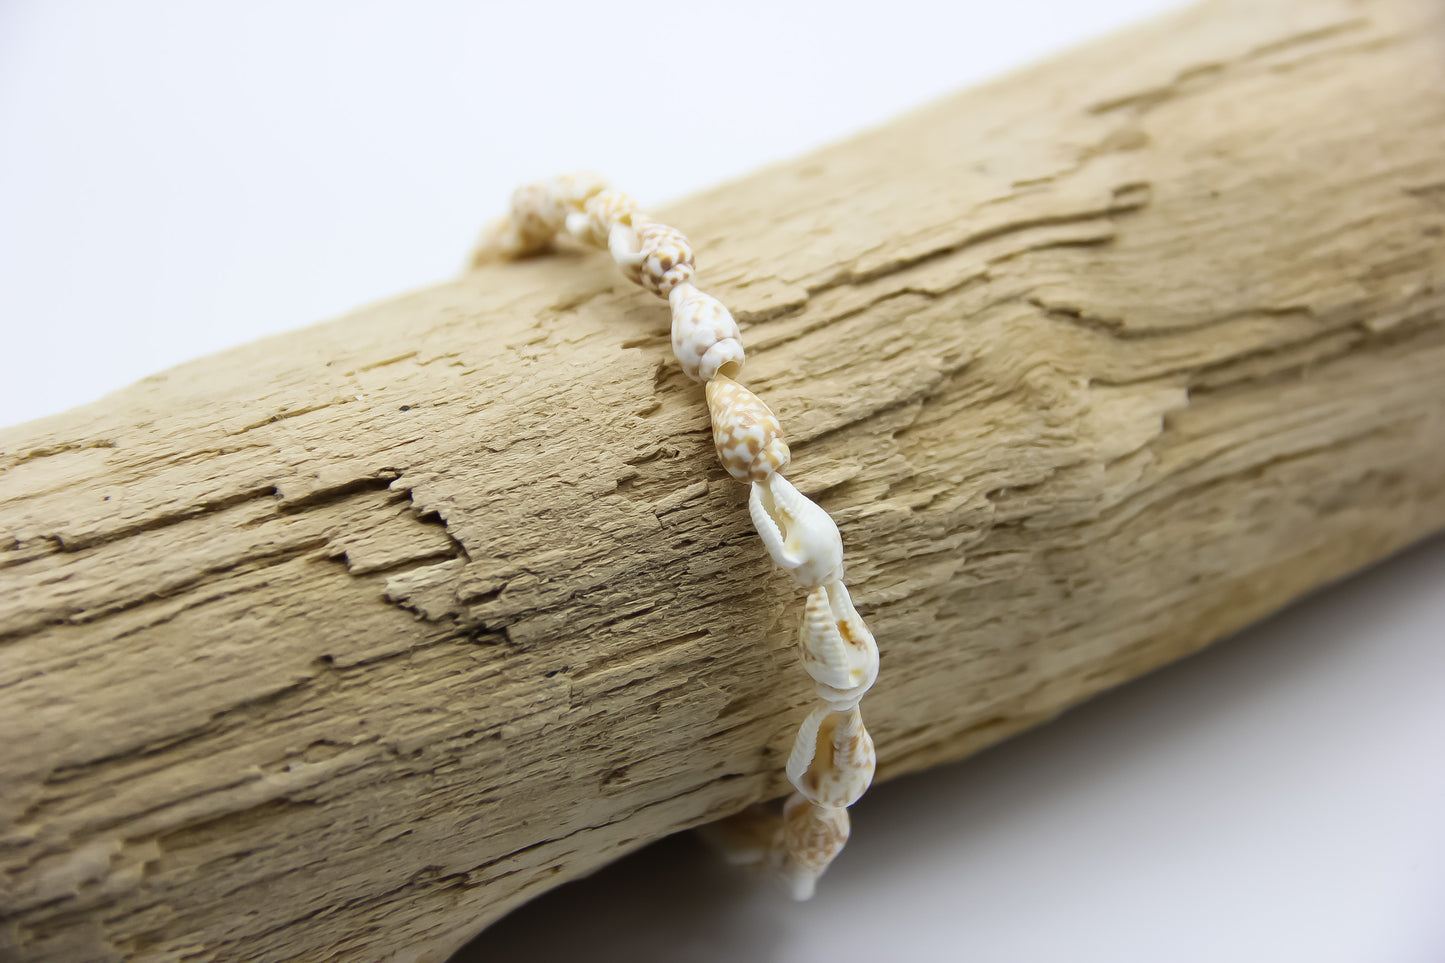 Seashell bracelet on a piece of driftwood